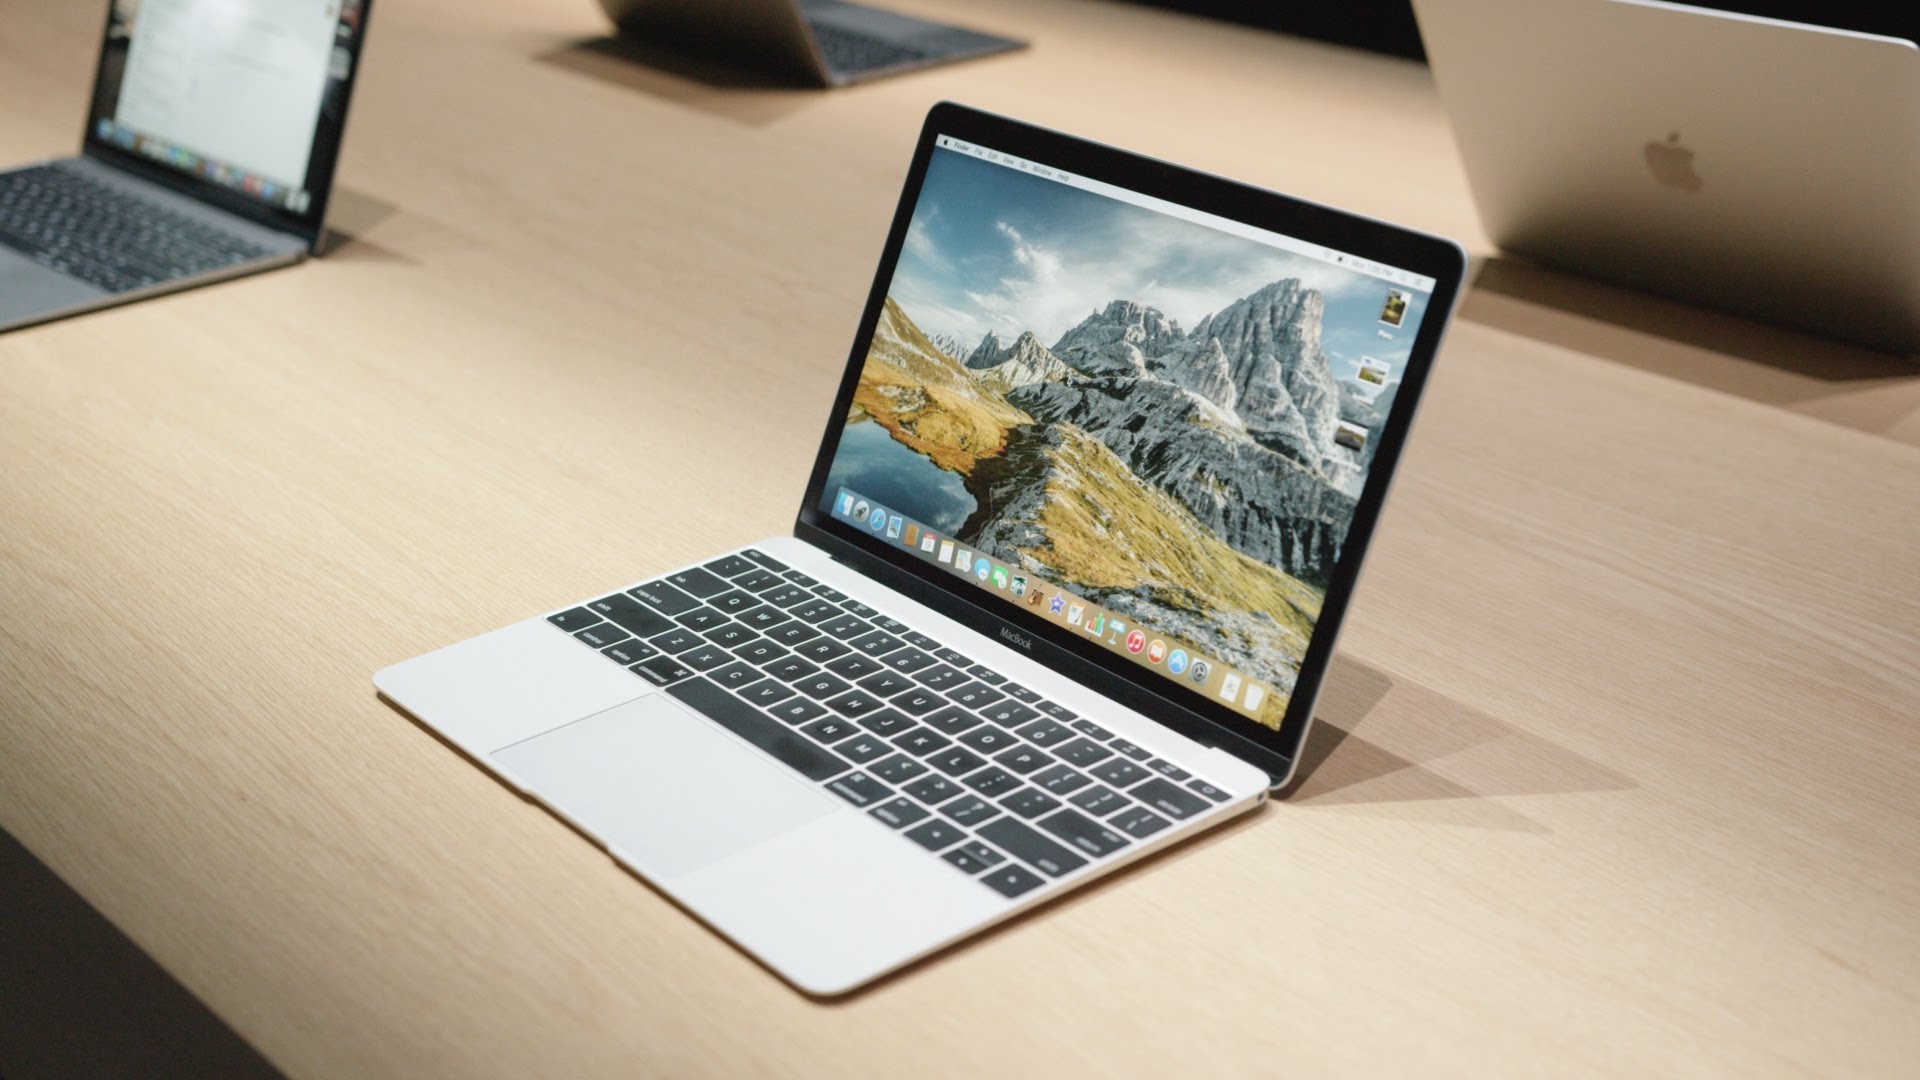 Mua laptop macbook trả góp ở tphcm lãi suất cực kỳ thấp